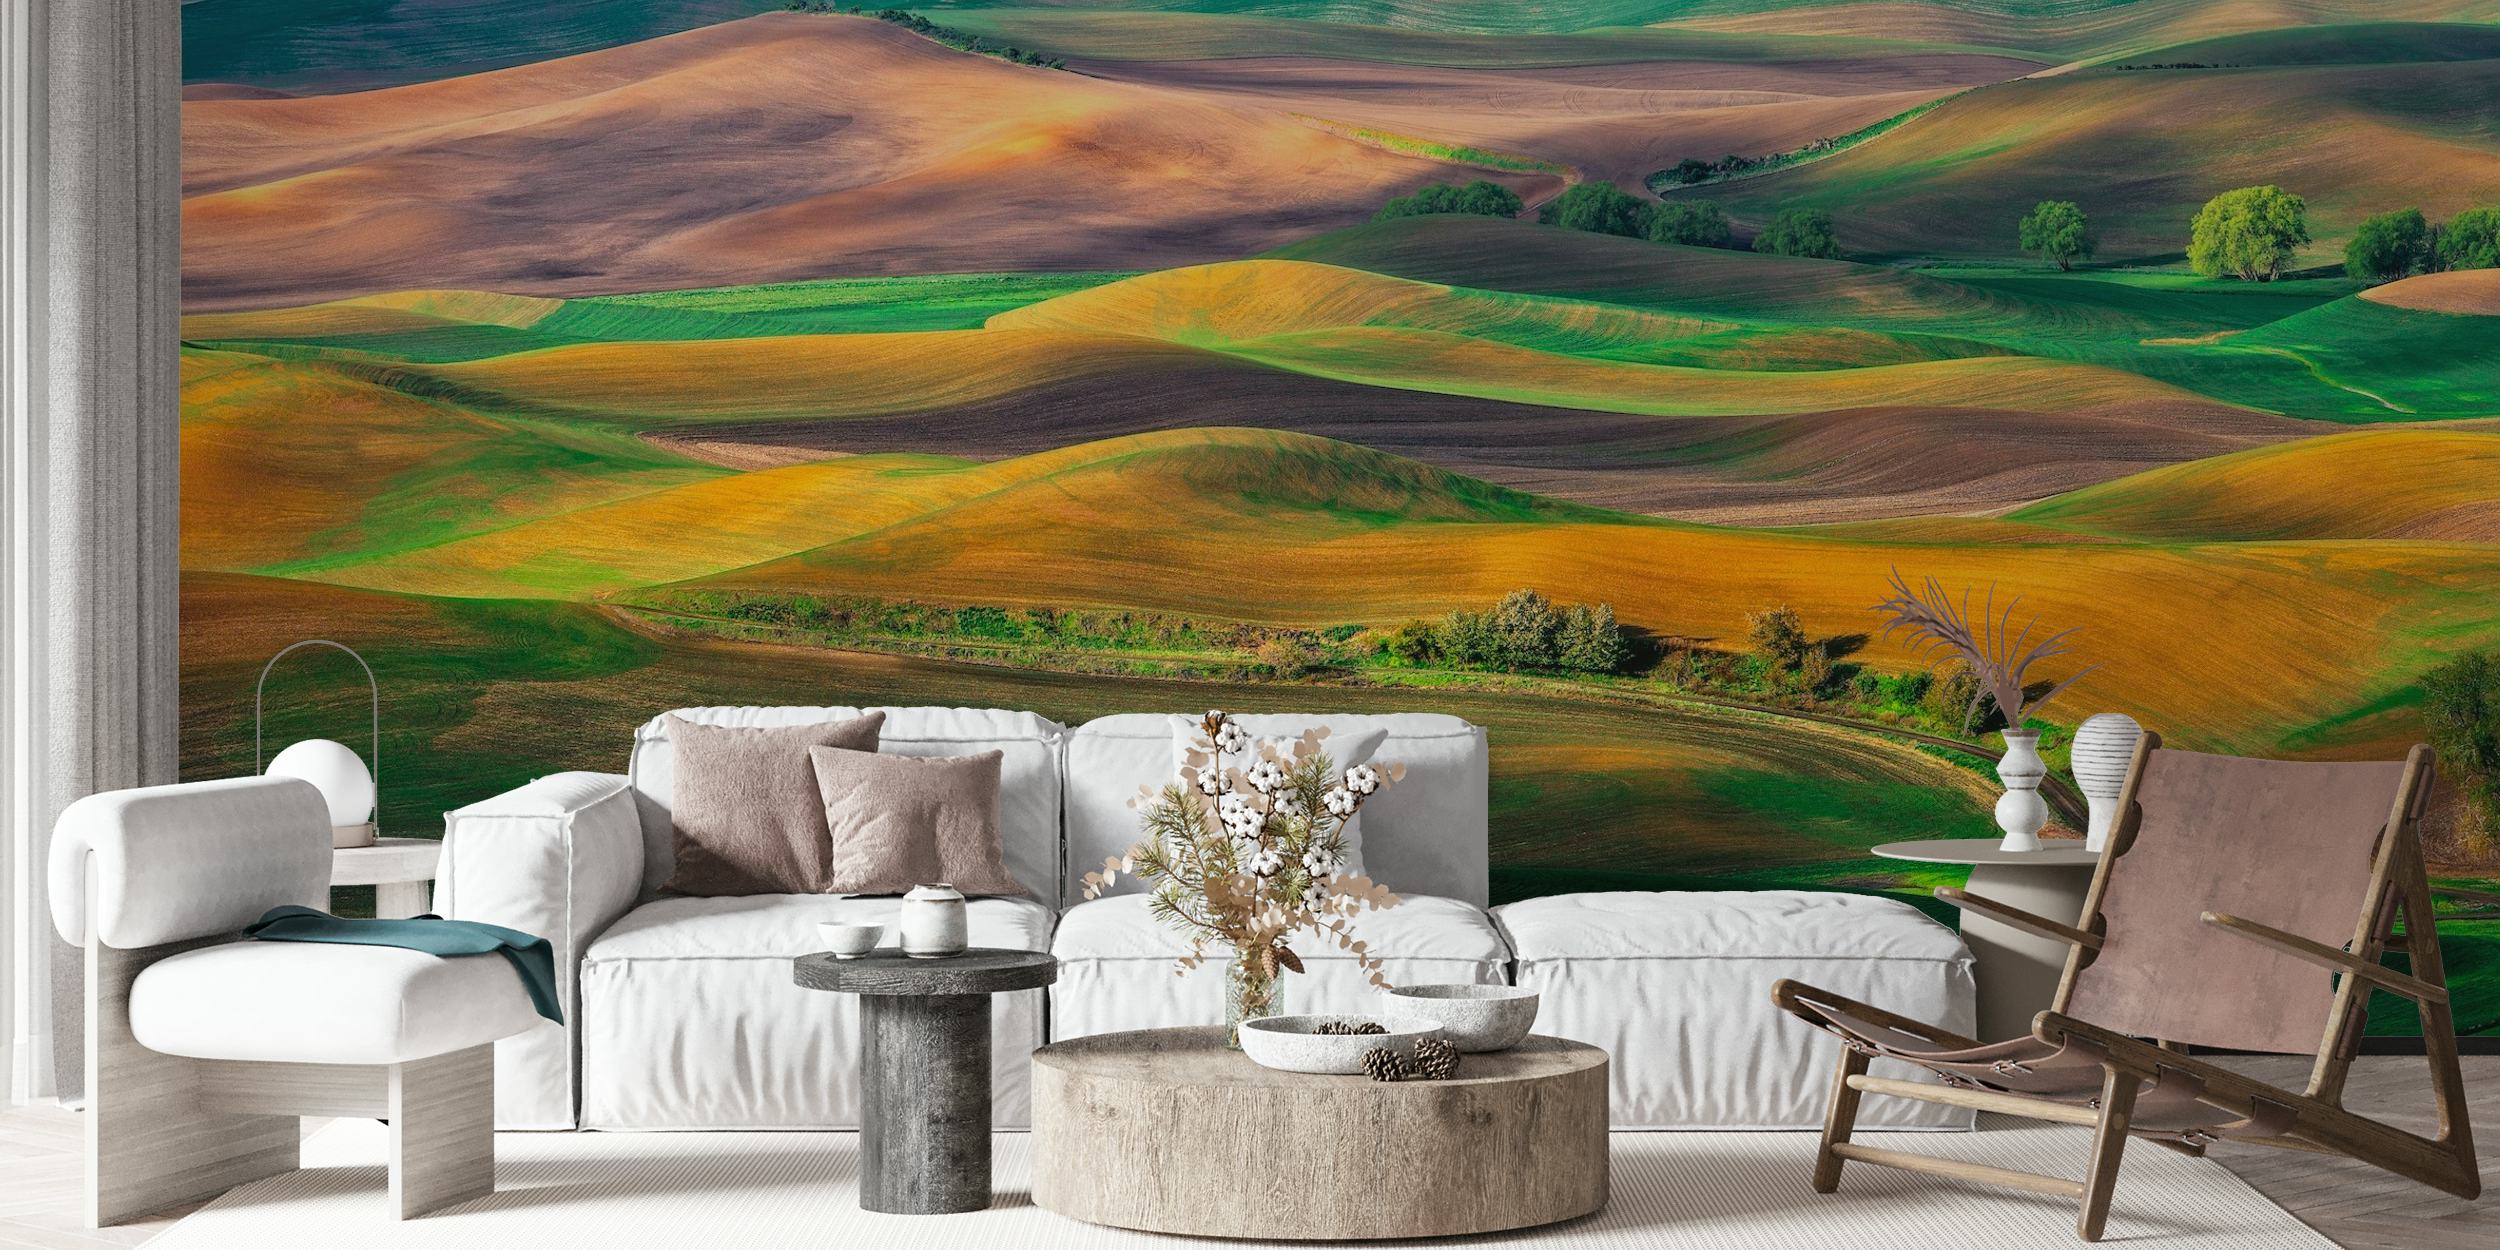 Mural de las colinas de The Palouse que representa un paisaje sereno